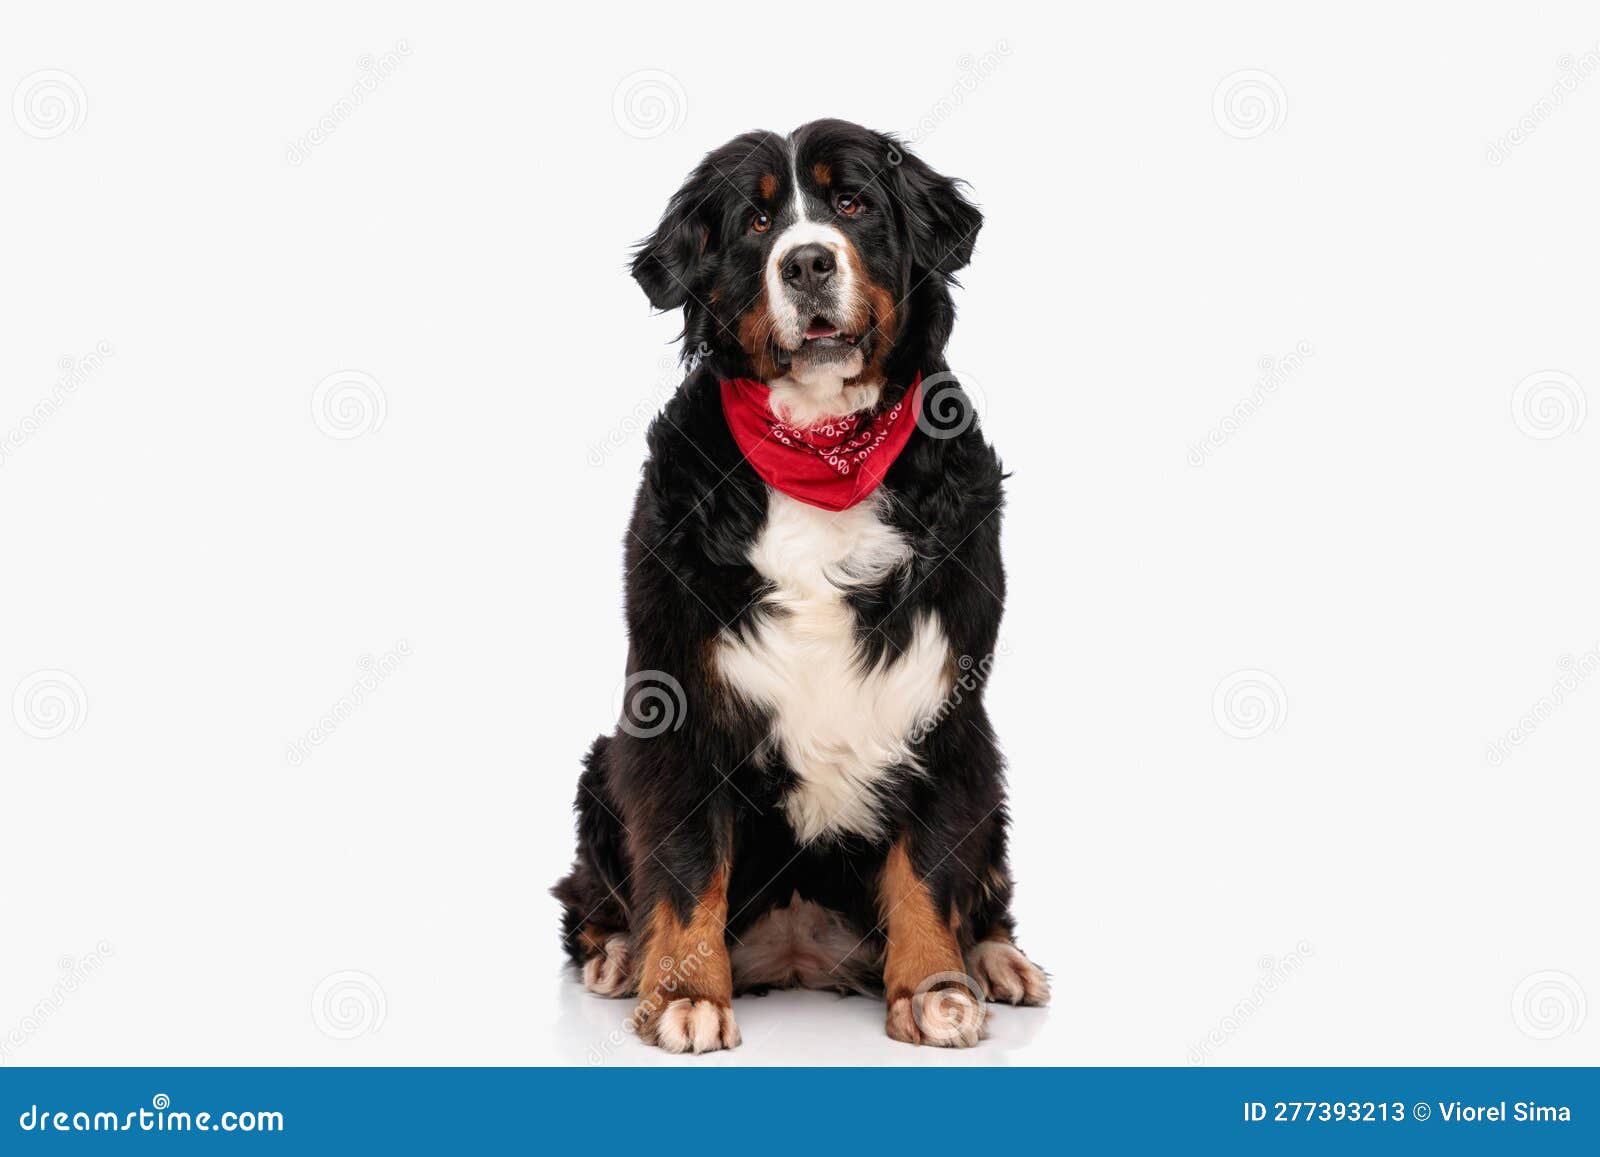 adorable berna shepherd dog with red bandana opening mouth